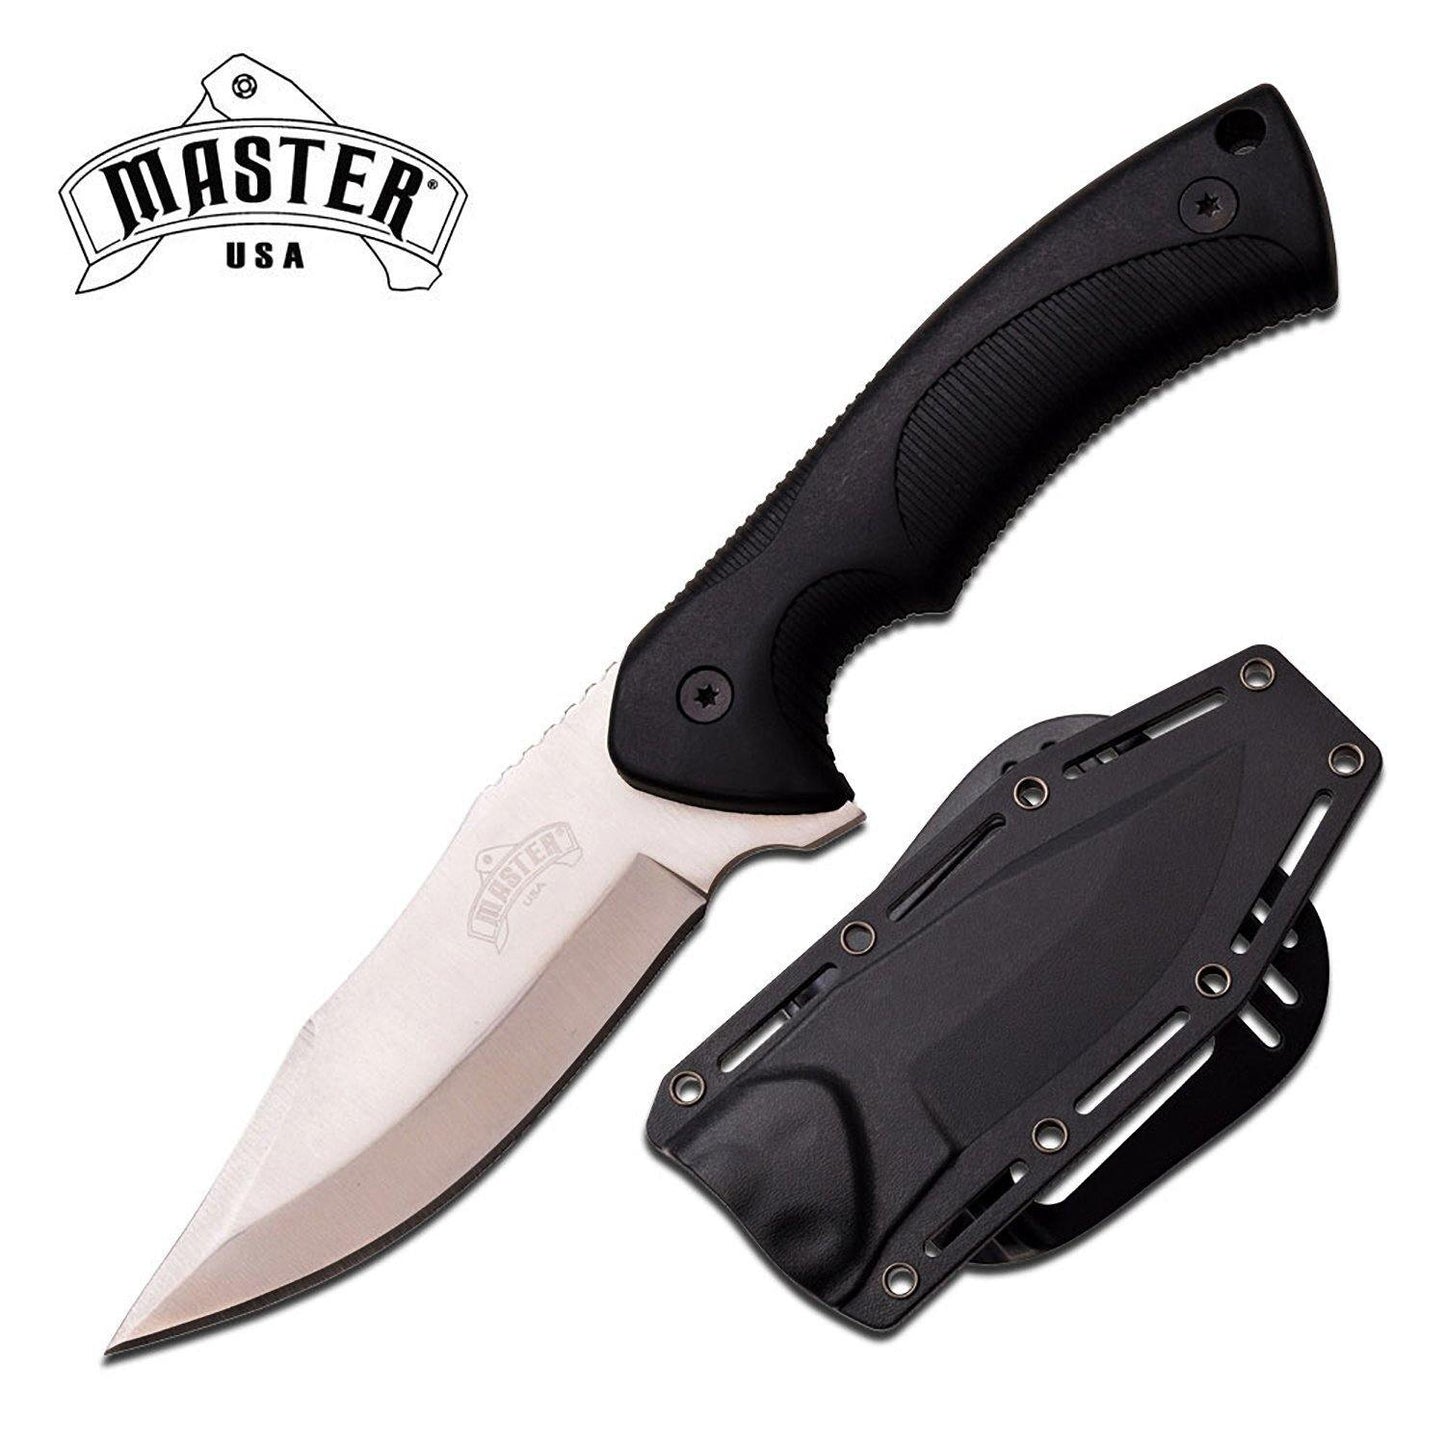 Master Usa Clip Point Fine Fixed Blade Knife - 9.25 Inches Overall Molded Sheath #mu-1149 - Xhunter New Zealand